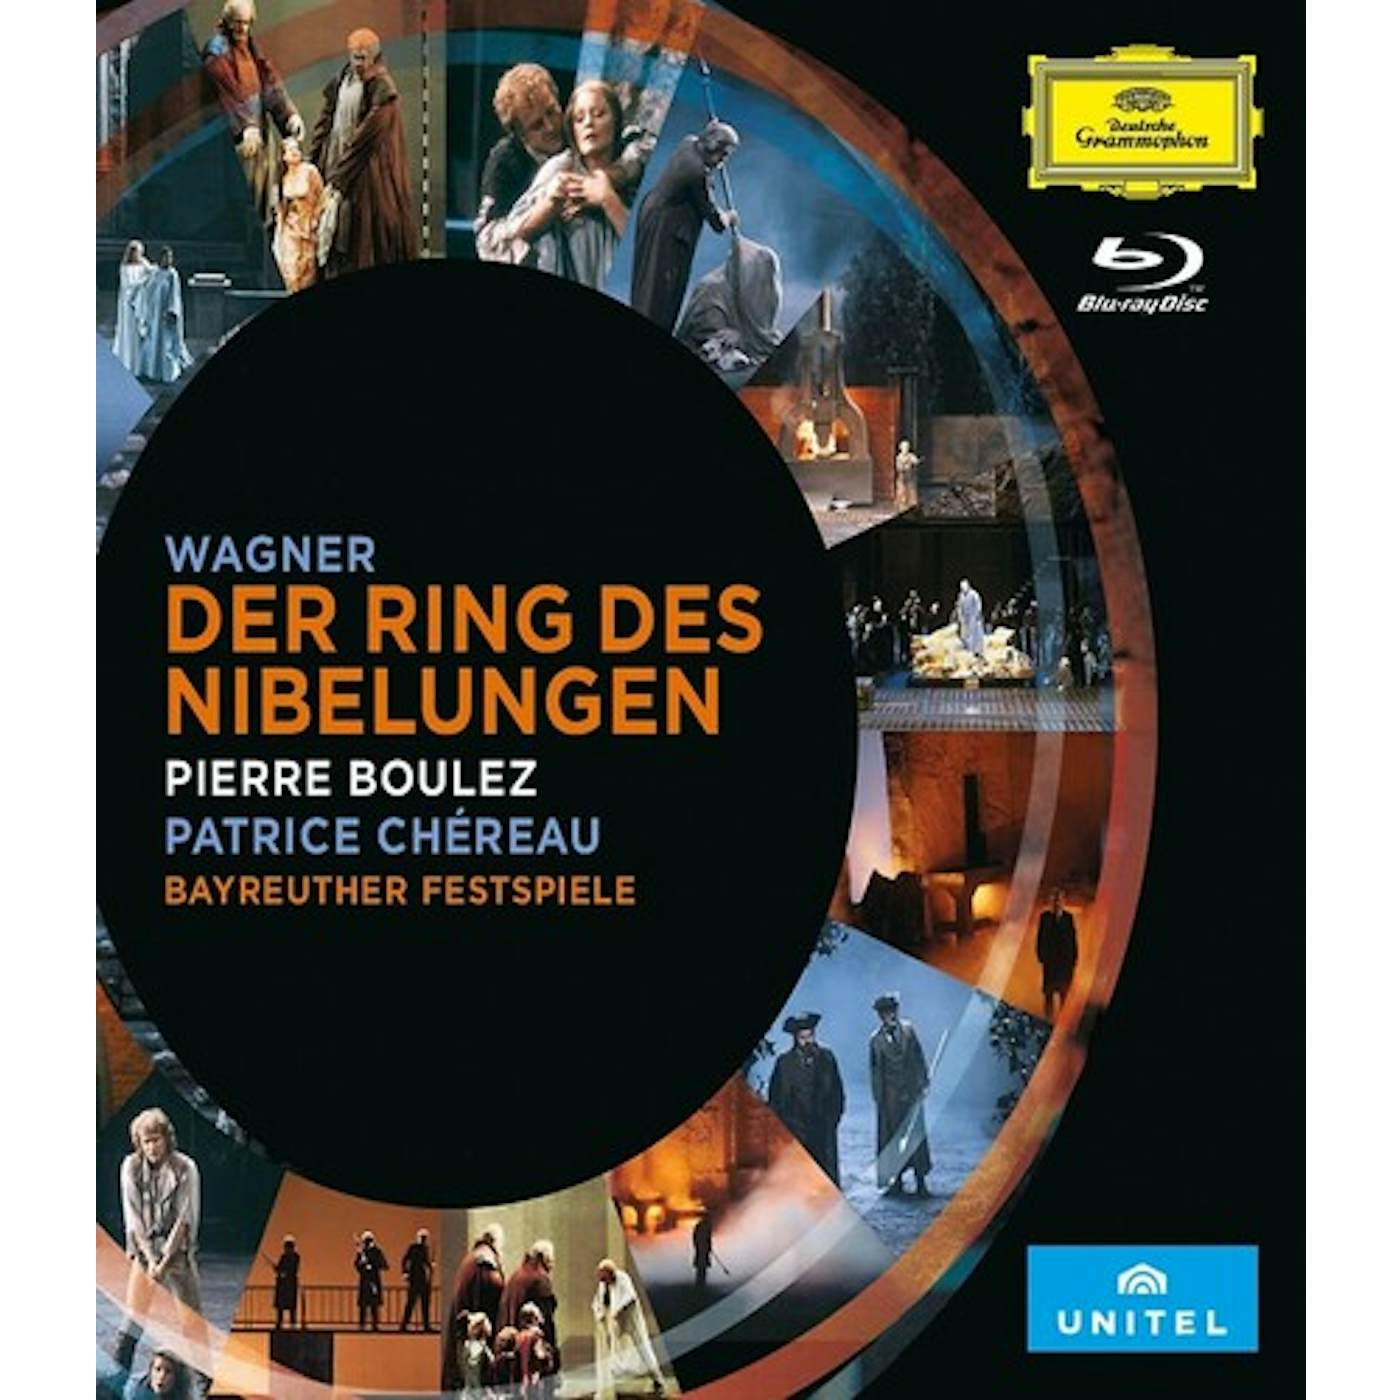 Pierre Boulez WAGNER Blu-ray